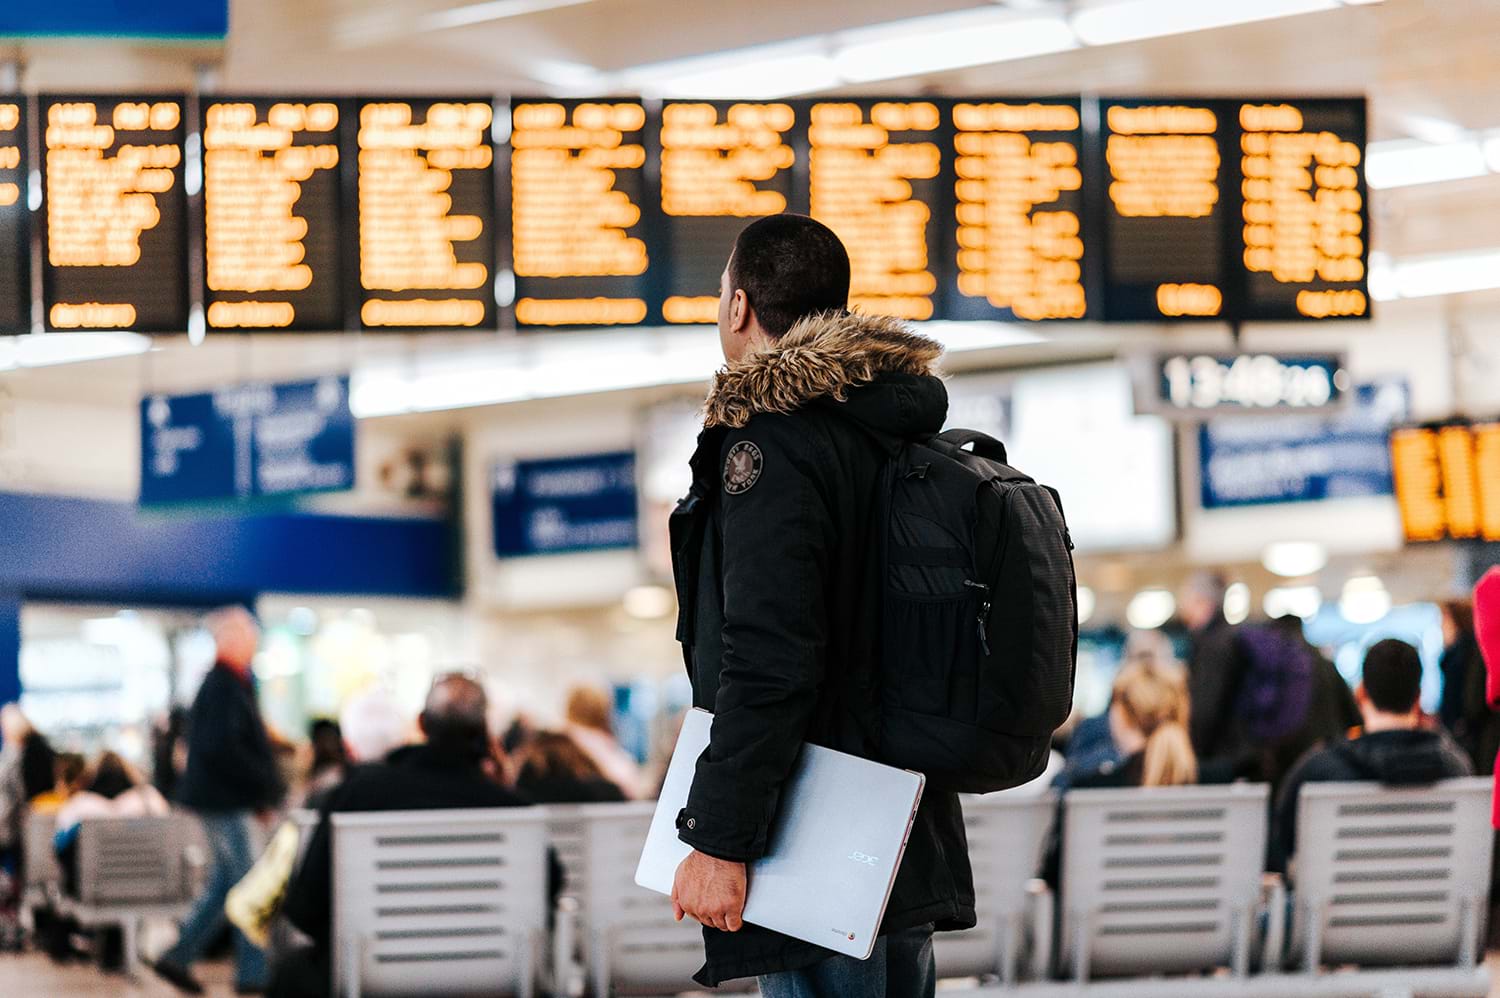 Traveler making their way through crowded airport